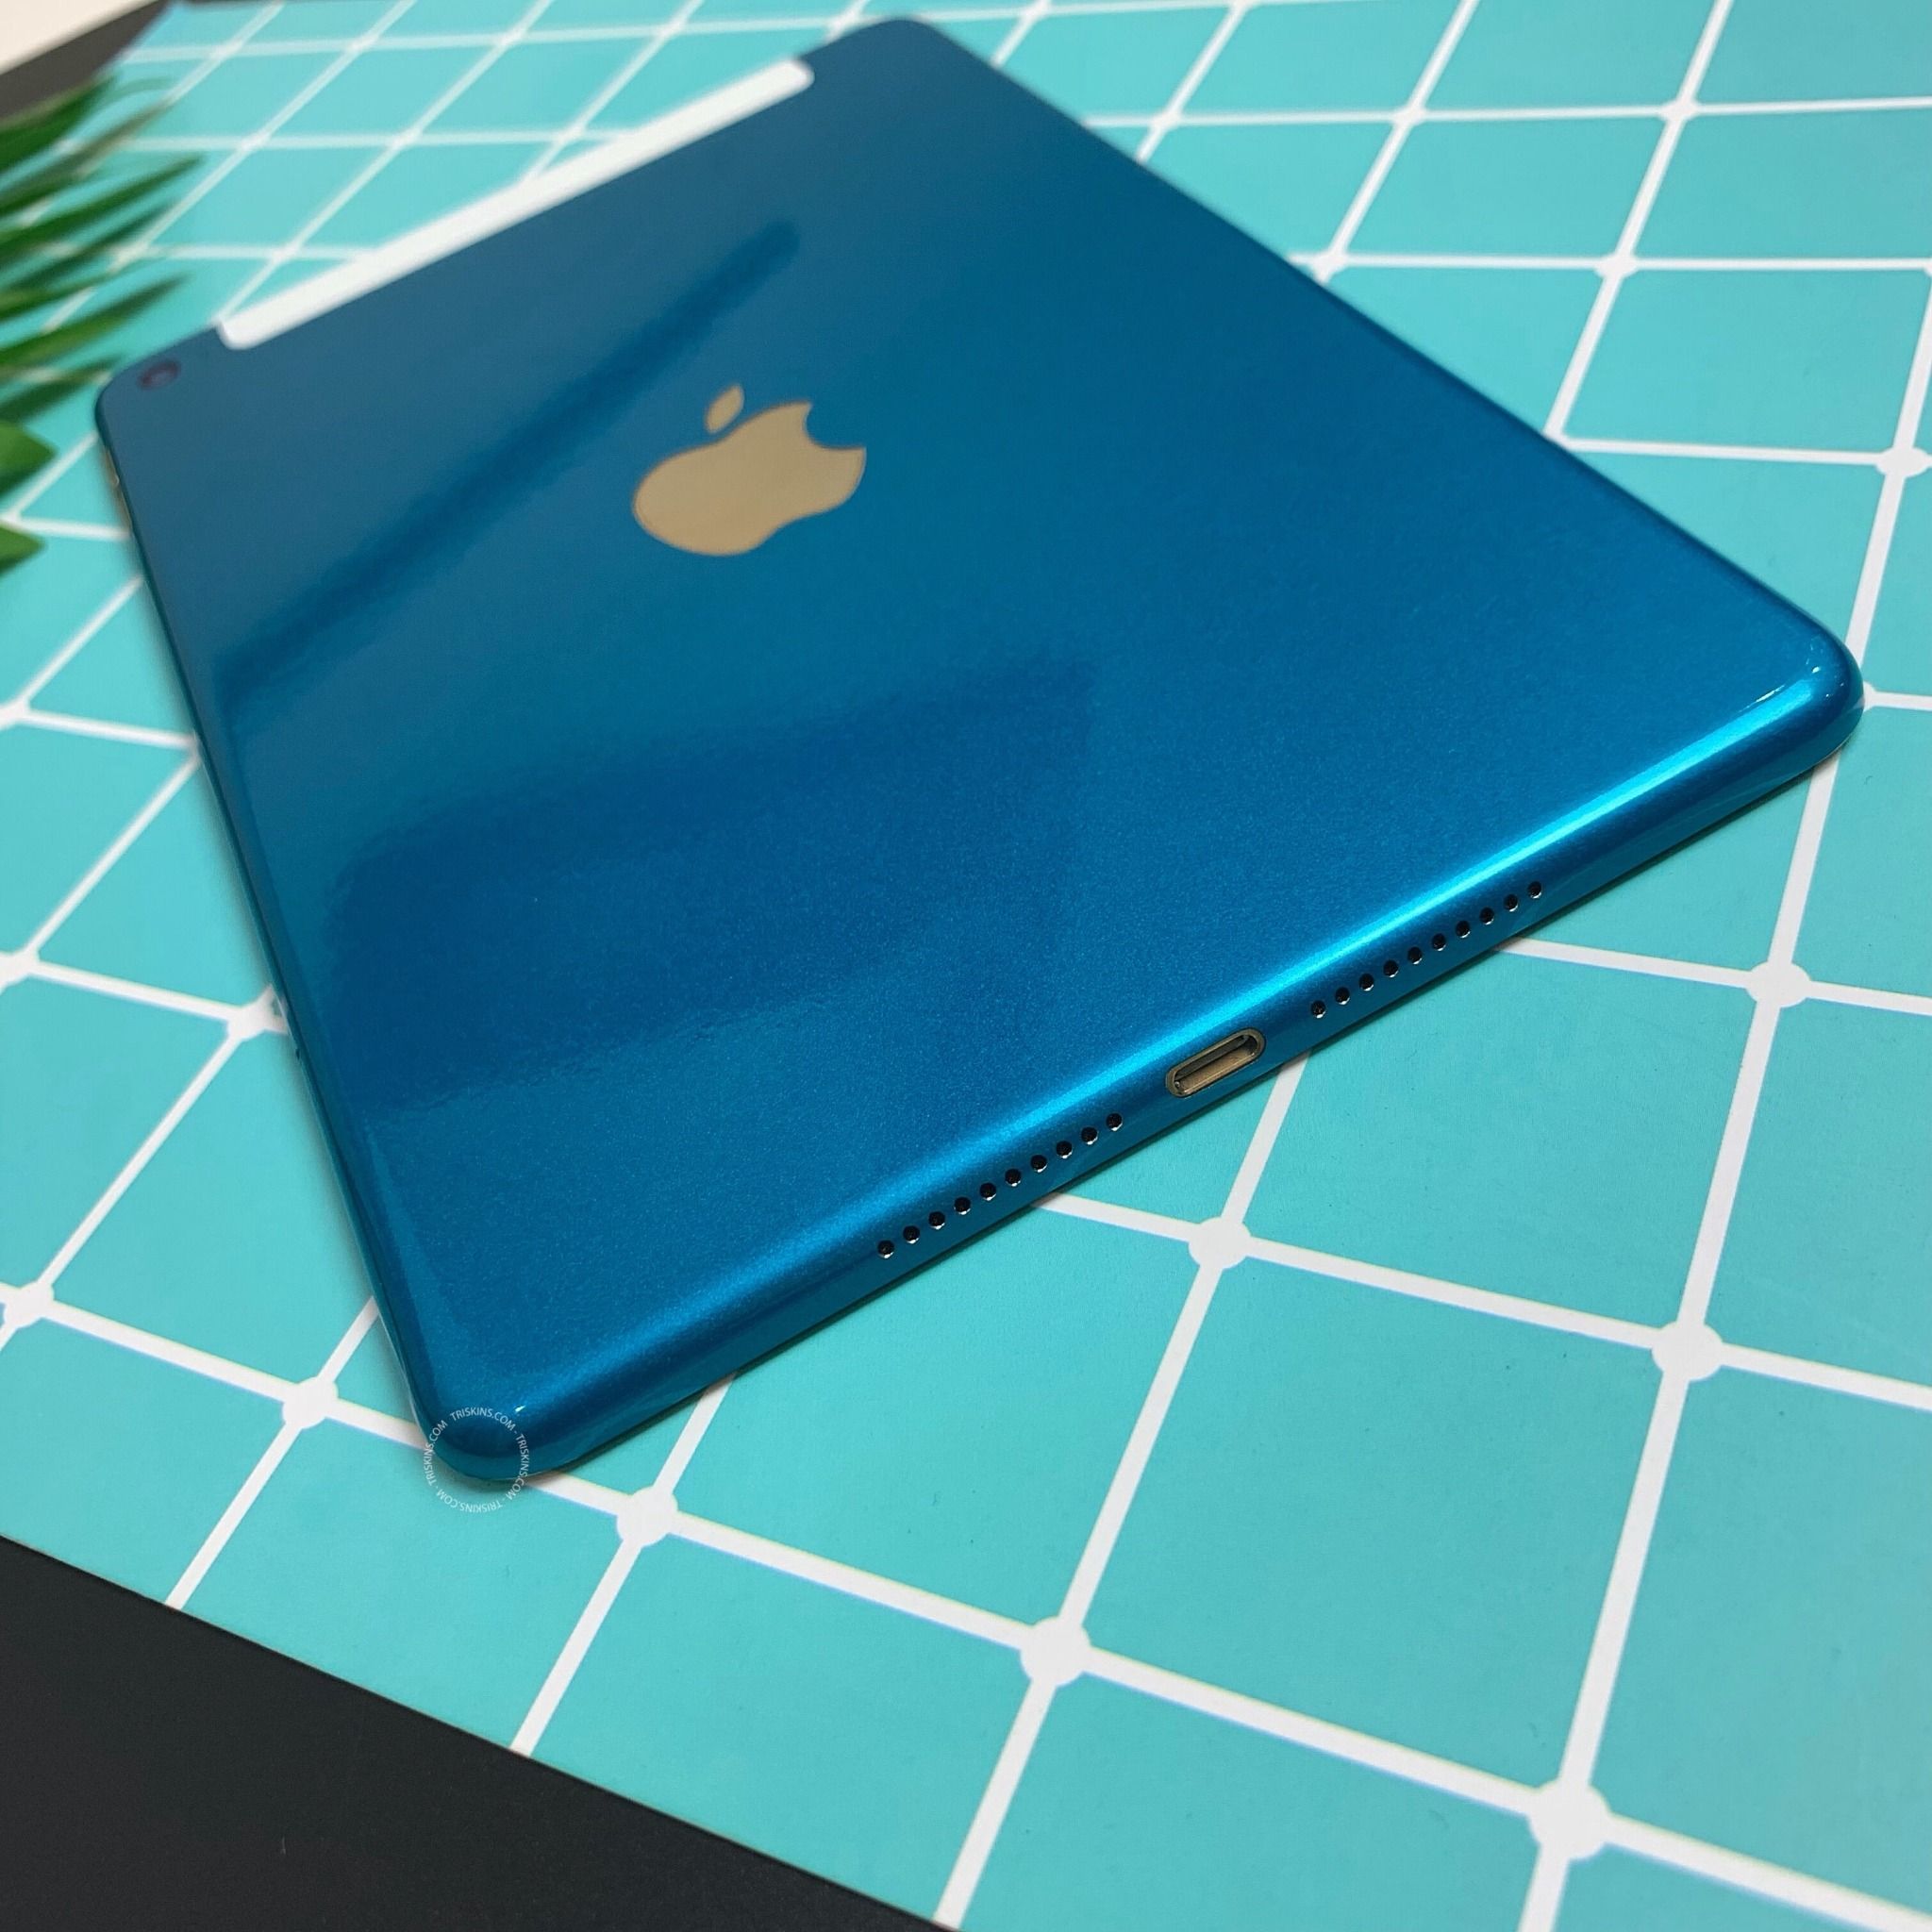  Skin iPad Pro 11 inch 12.9 inch | Gloss Blue Metallic 